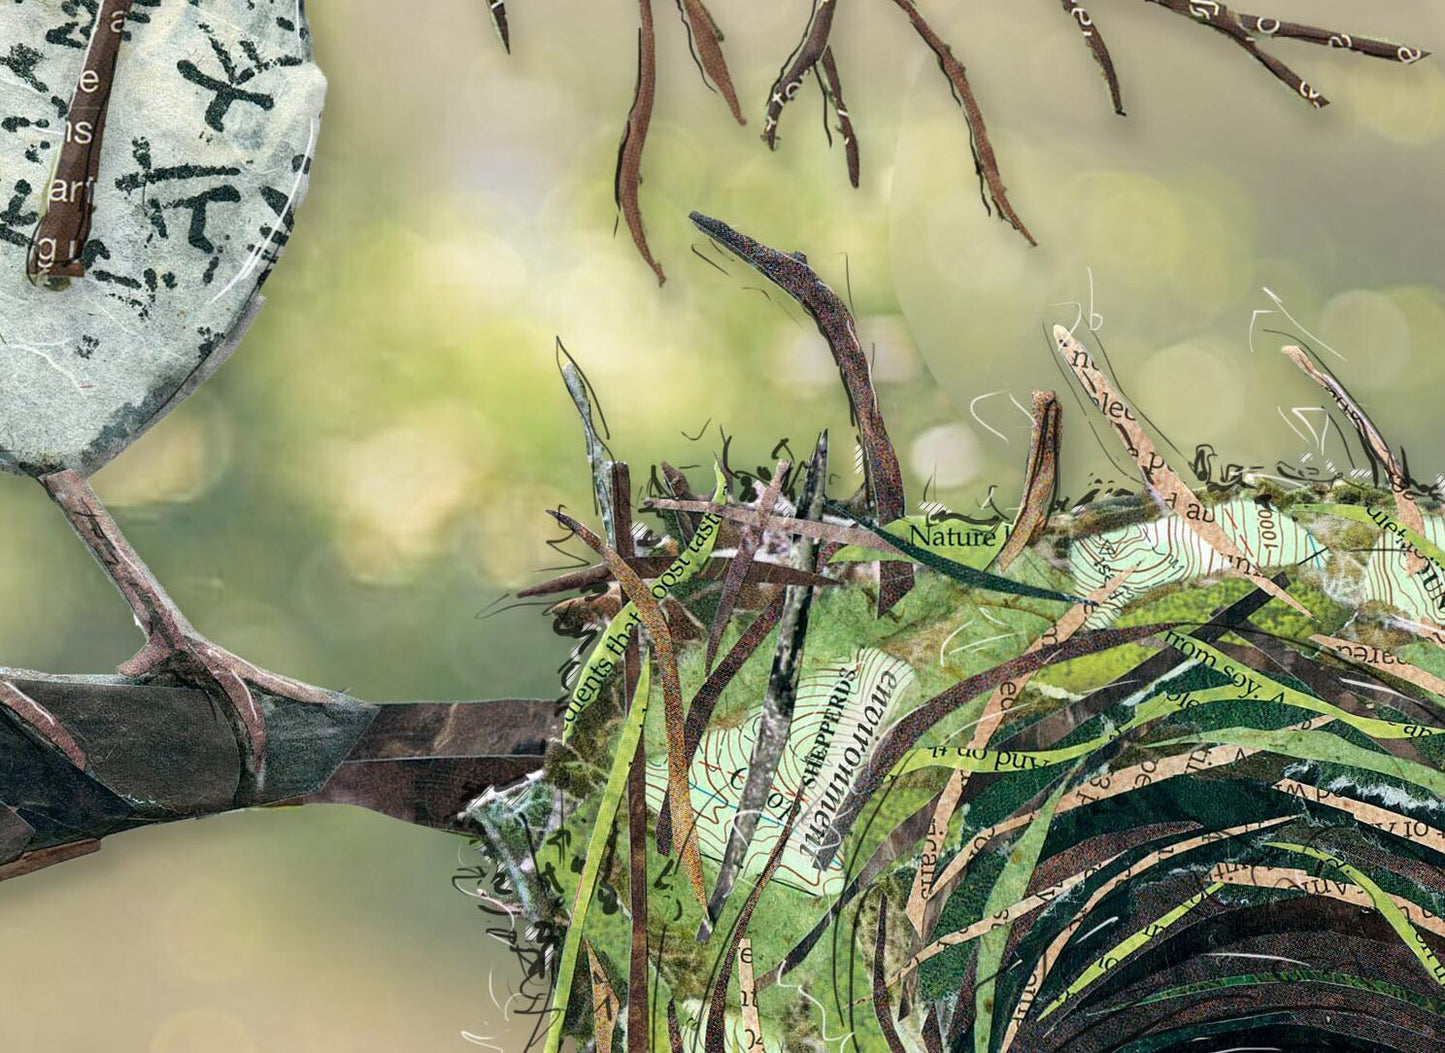 8x10 Art print of a Paper Collage of Swainson's Thrush bird building a nest in a fir tree - Wall Art